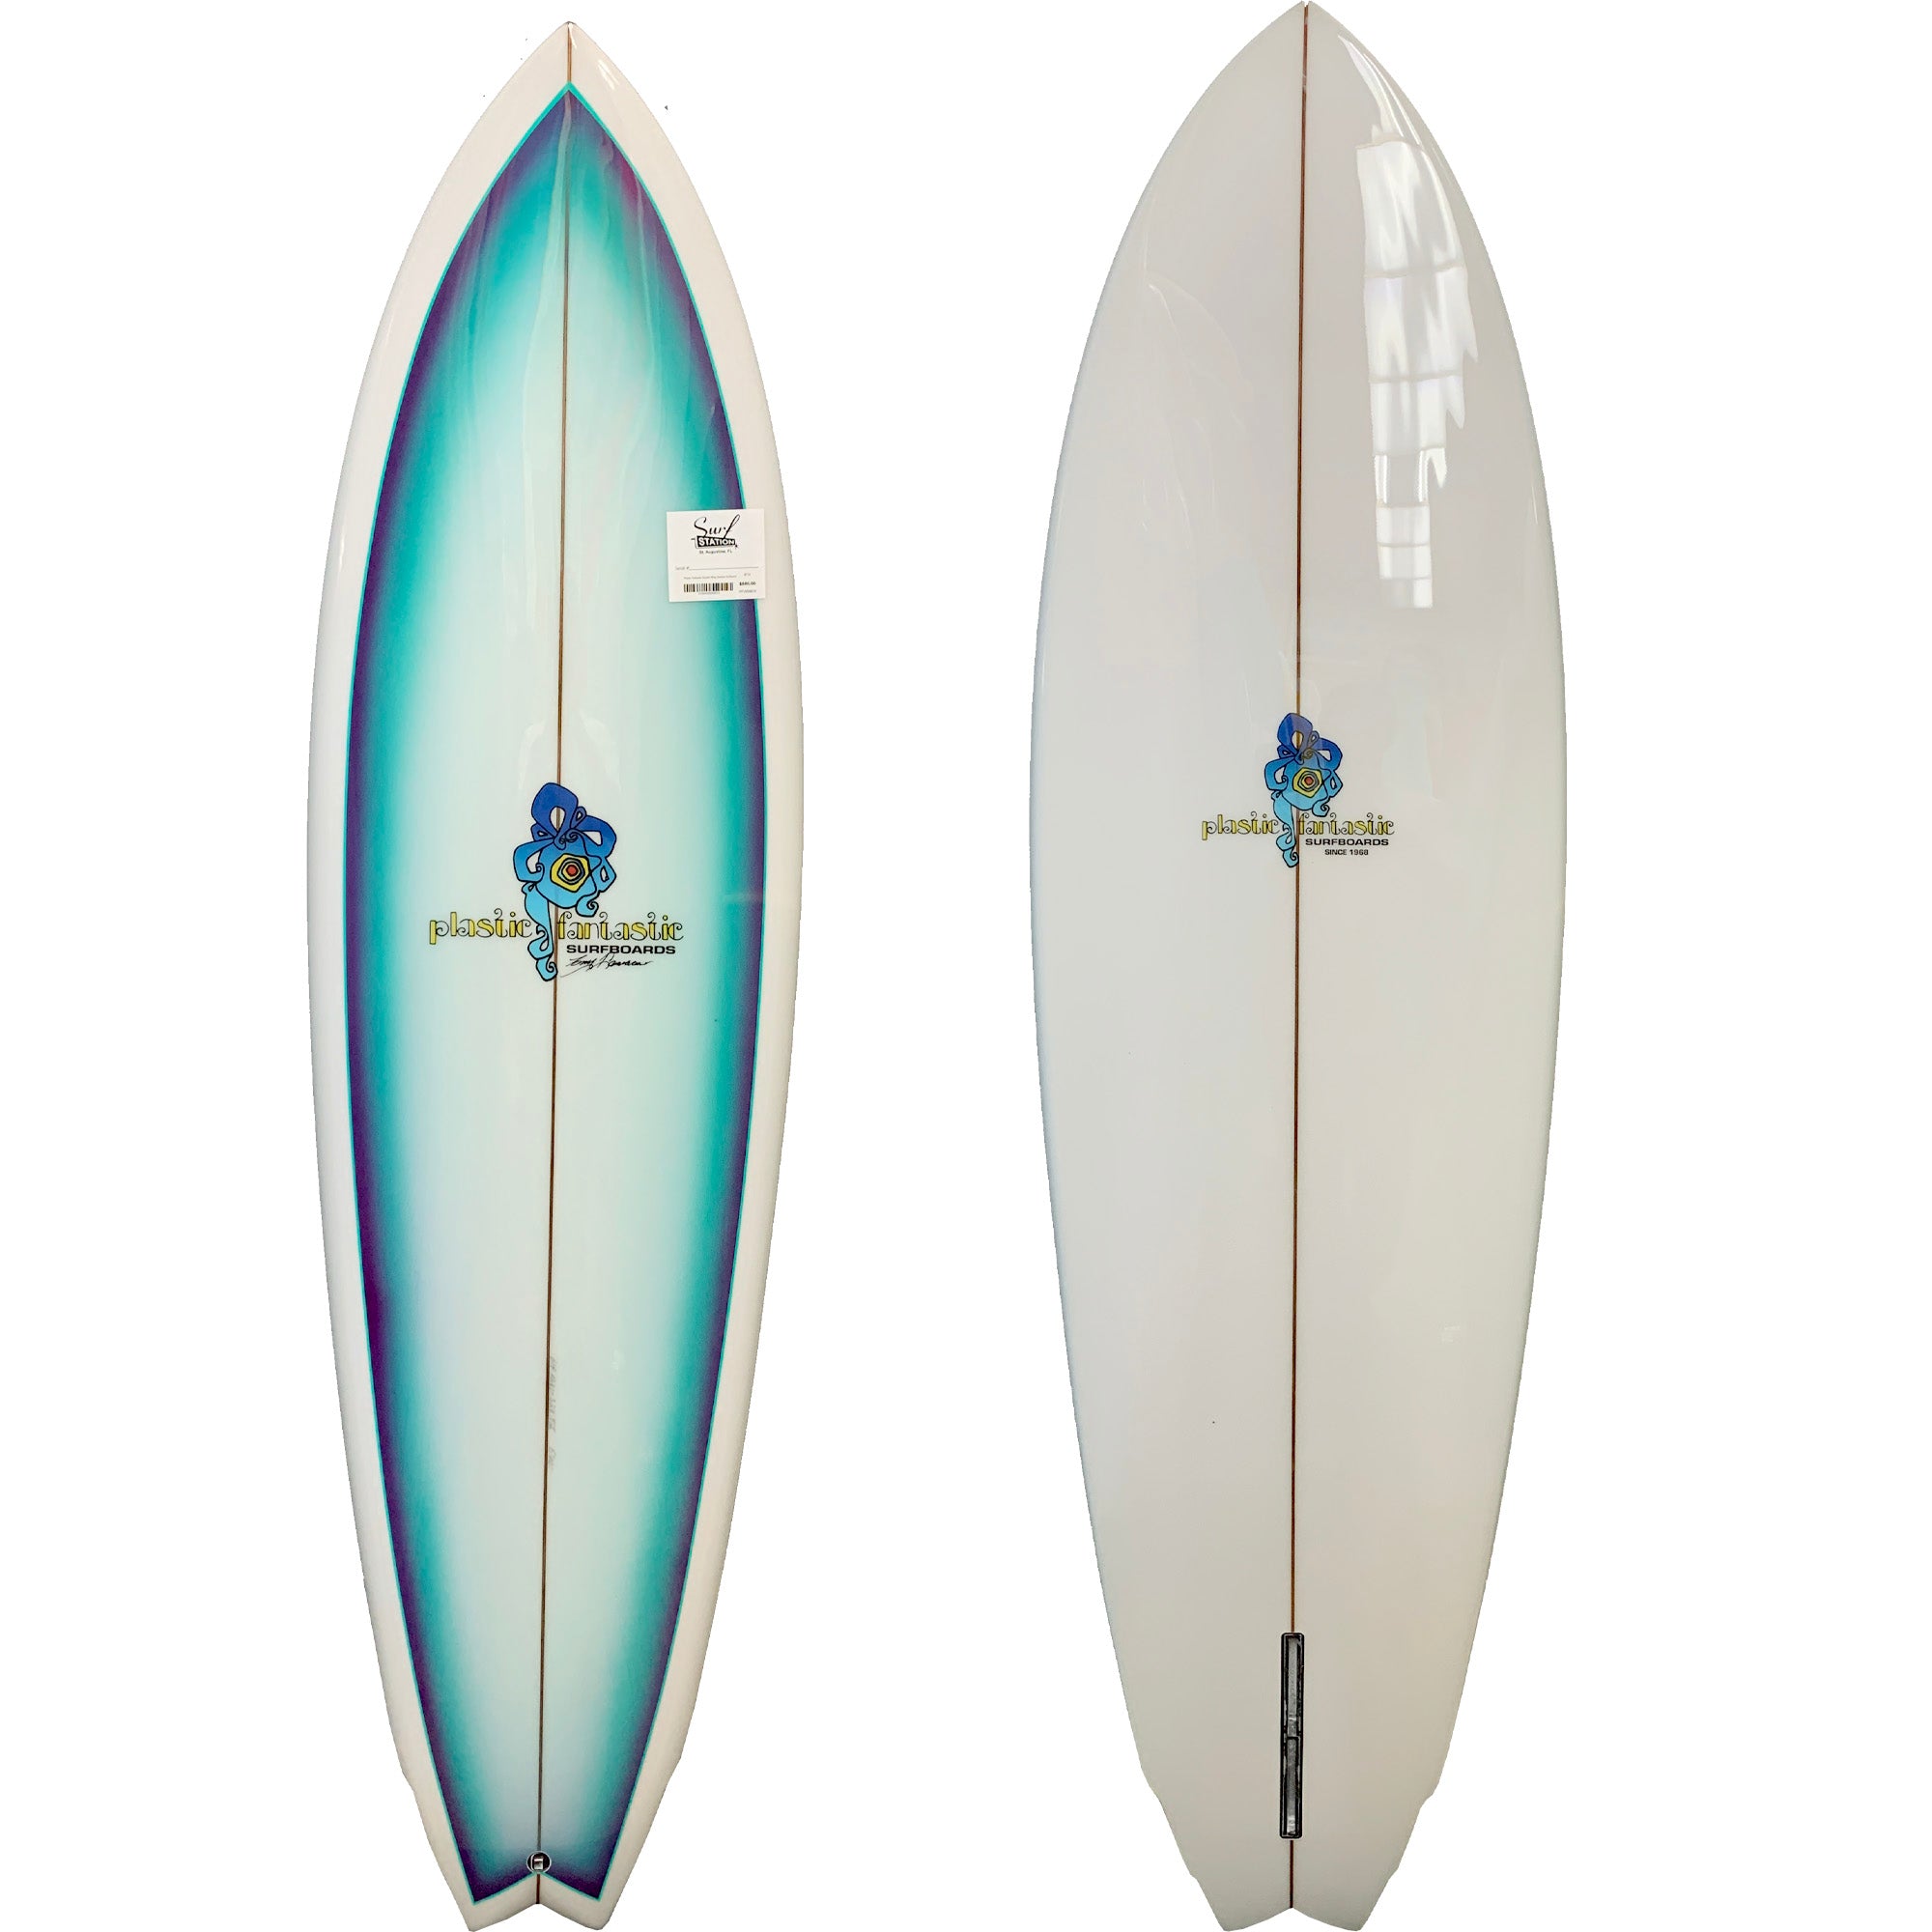 Plastic Fantastic Double Wing Swallow 6'10 Surfboard